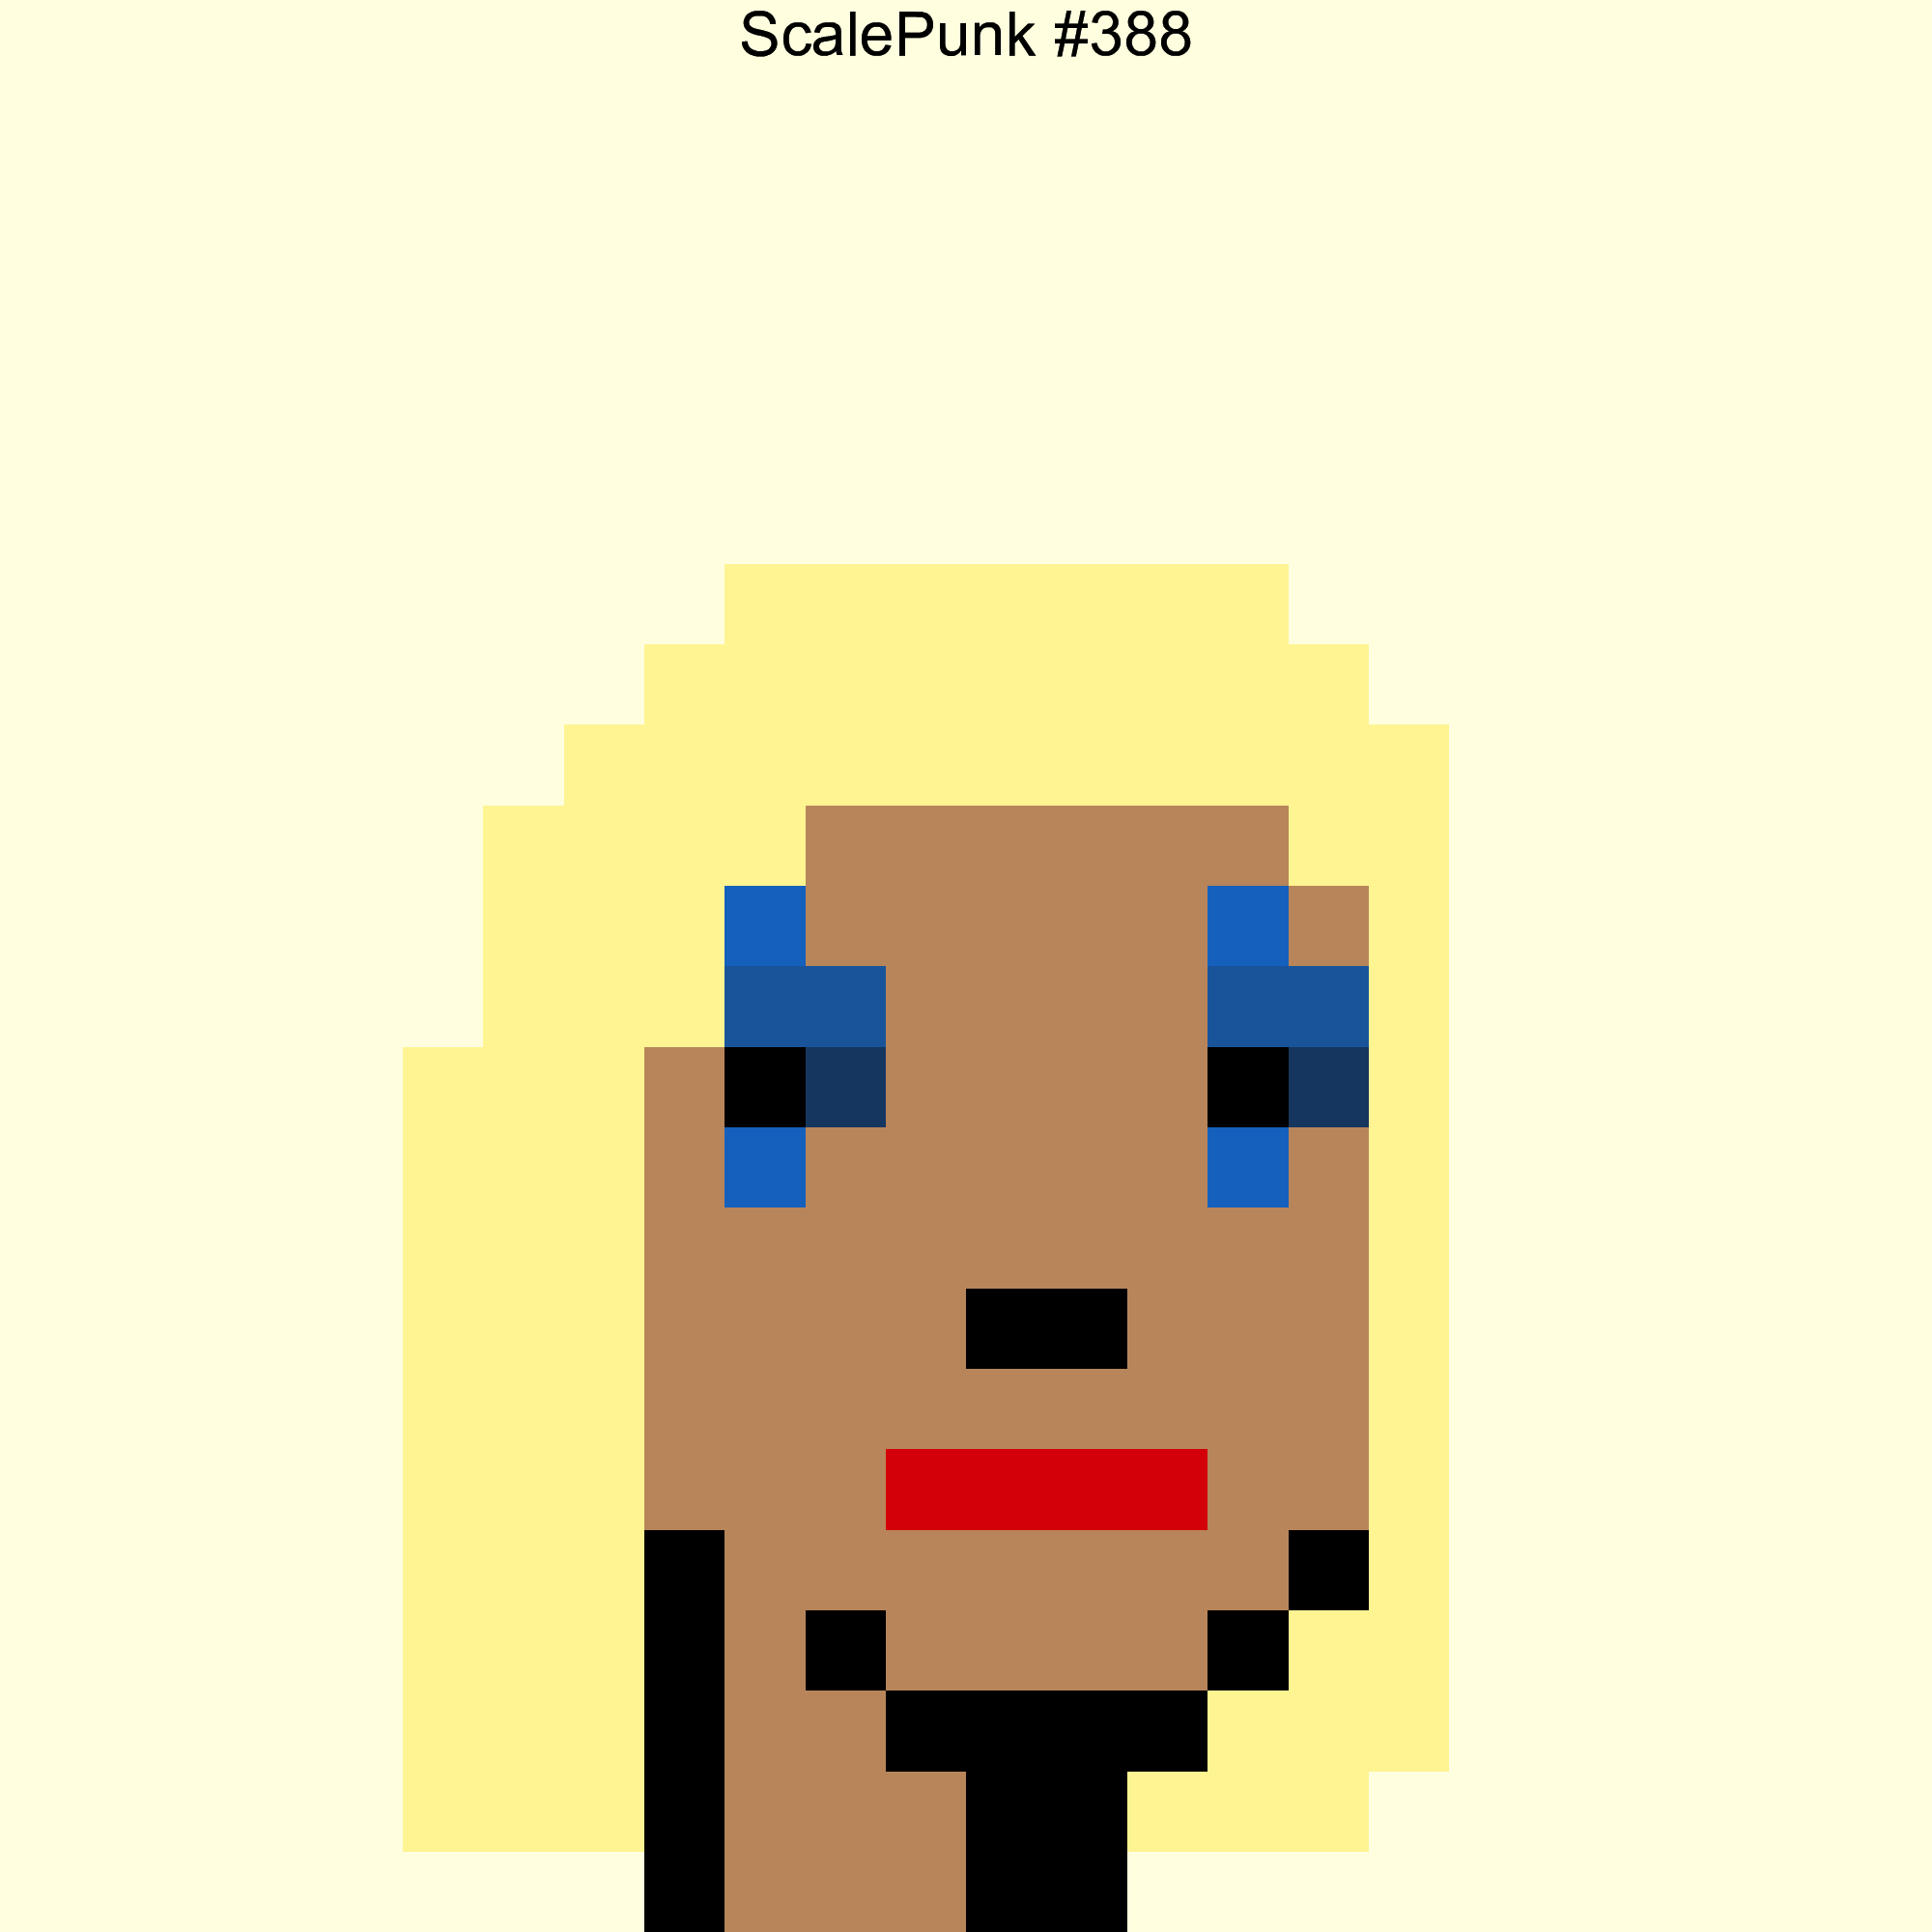 Punk 388